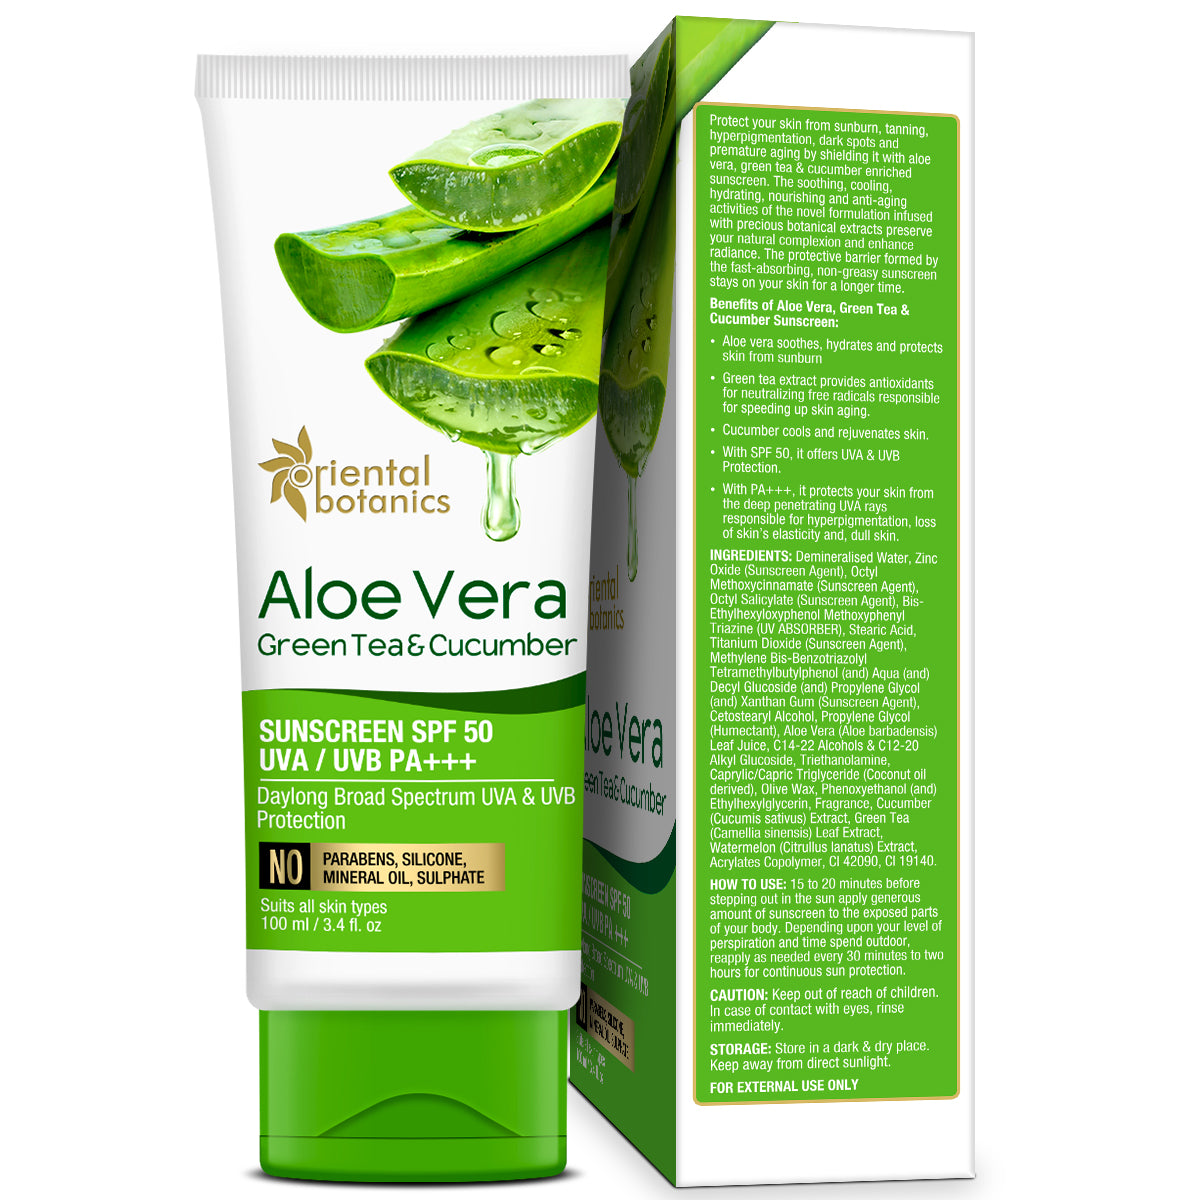 Oriental Botanics Aloe Vera, Green Tea and Cucumber Cream Sunscreen SPF 50 UVA/UVB Pa+++, 100 ml (ORBOT53)